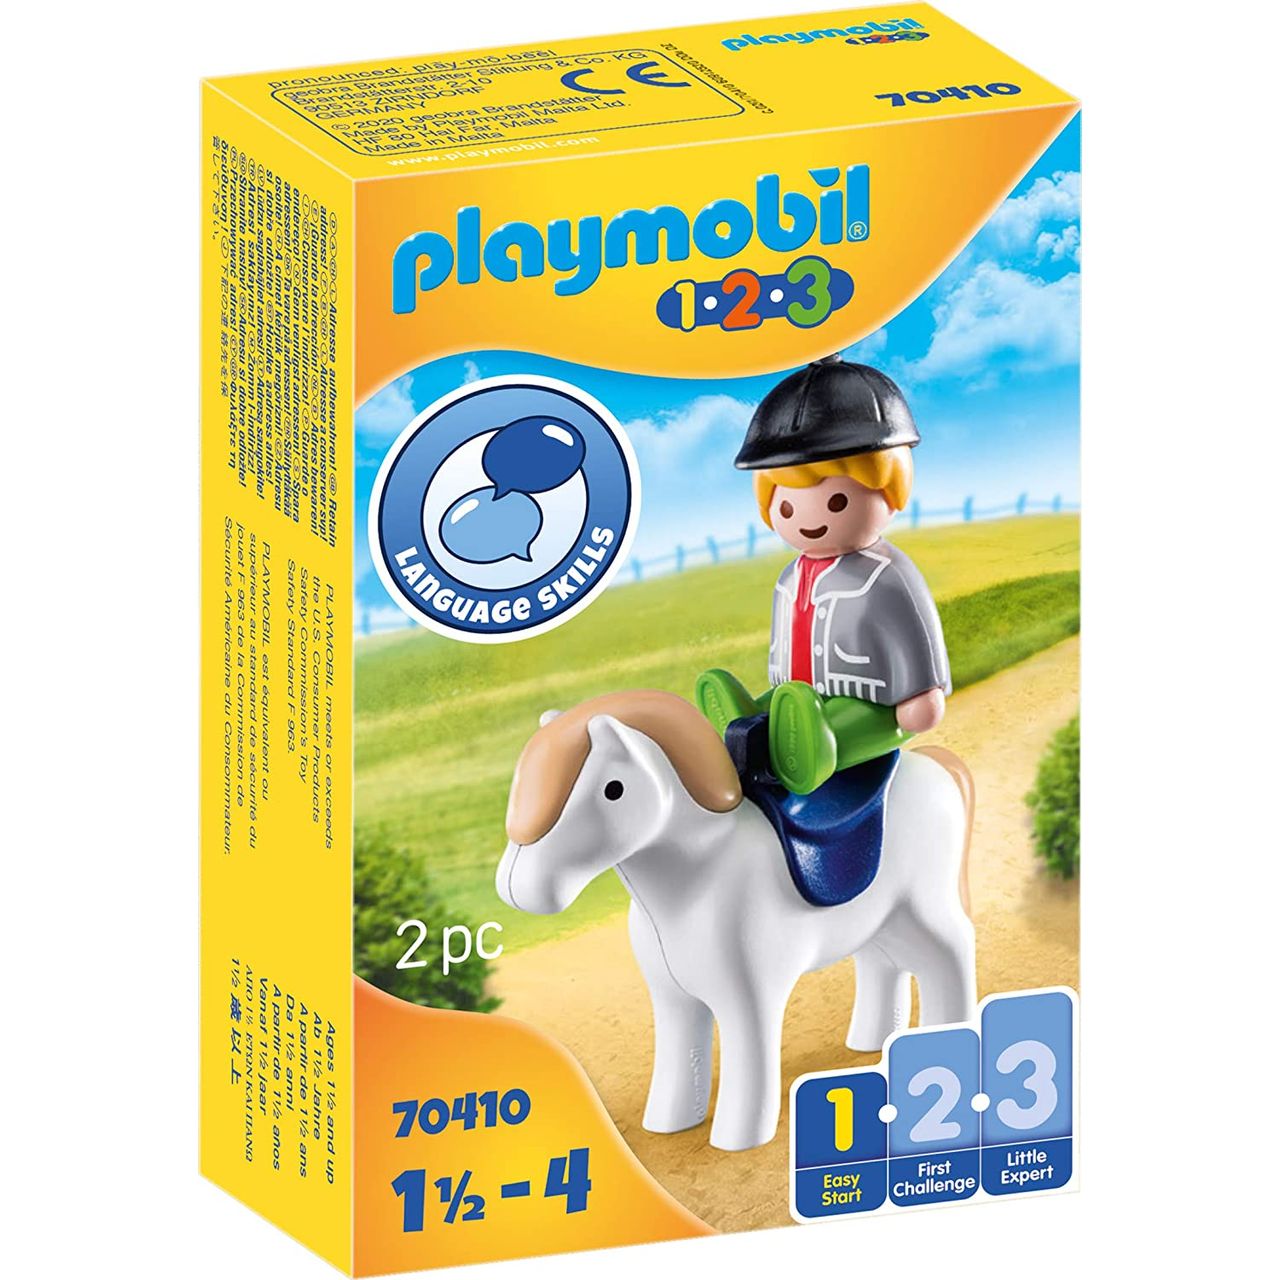 Feenspielplatz 70400 mit 3 Lernstufen ab 1,5-4 J.Neu & OVP! Playmobil ® 1.2.3 